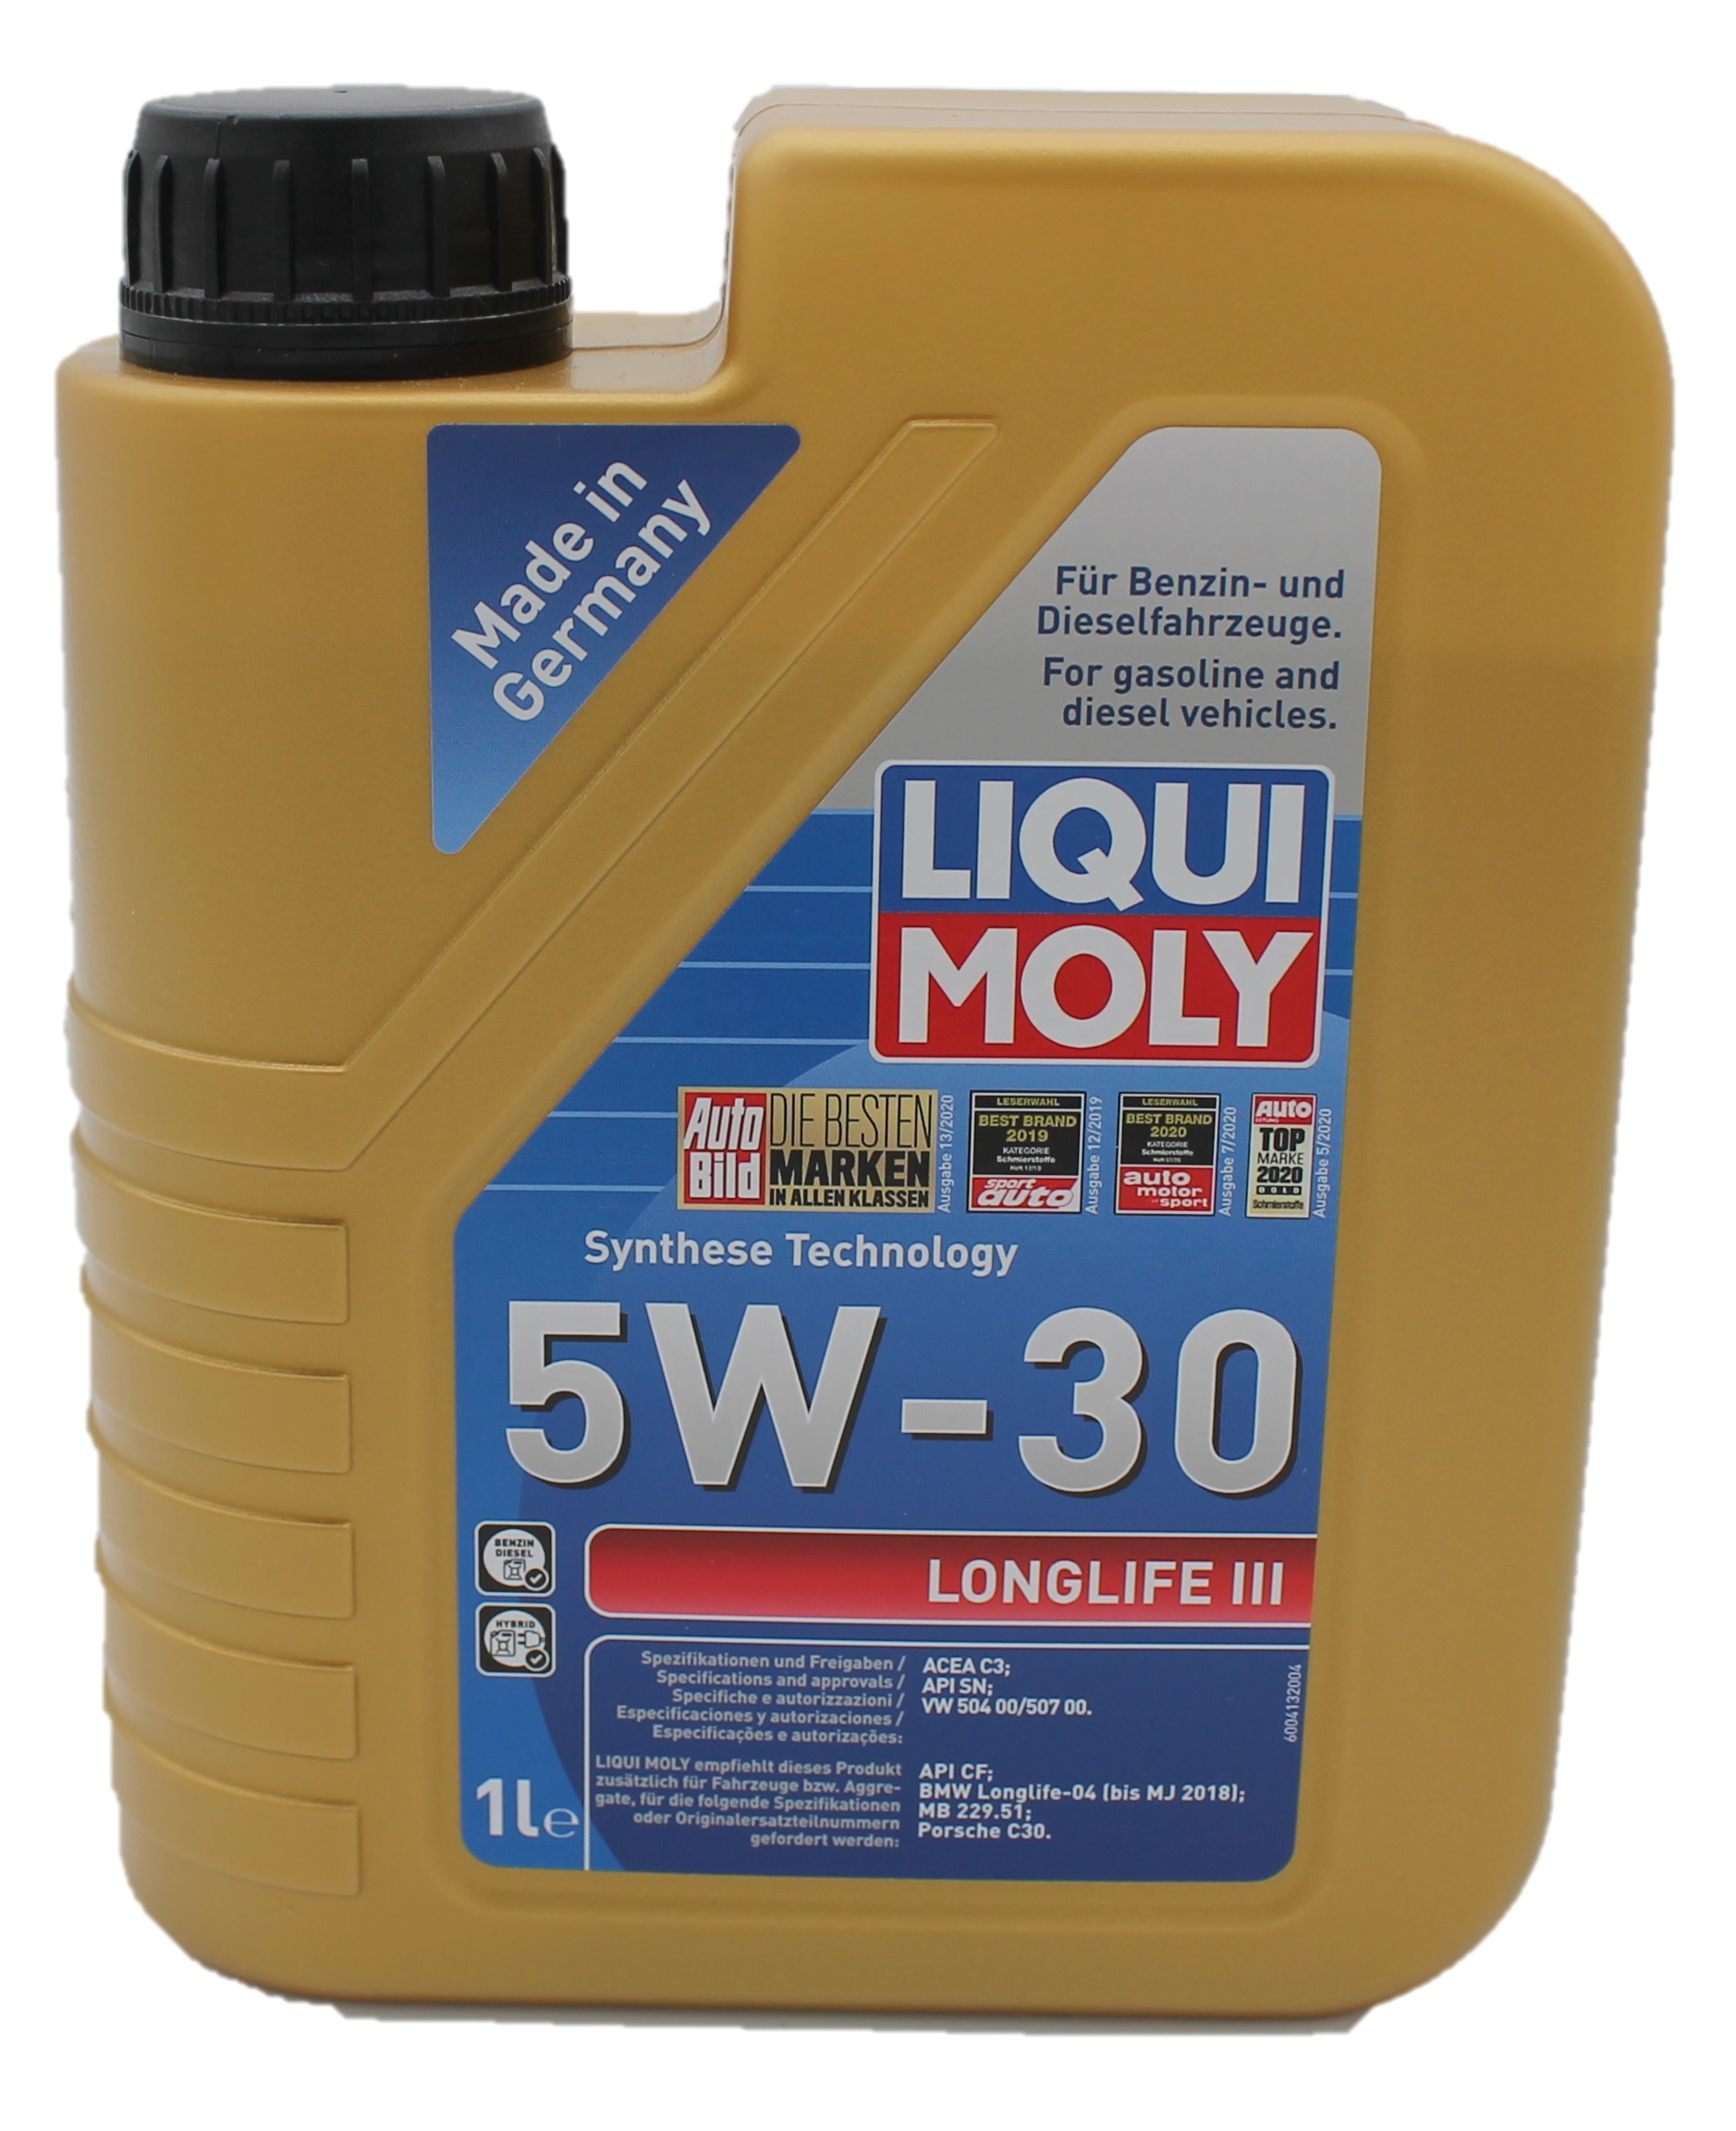 LIQUI MOLY LONGLIFE III 5W-30 (5 LITRI) – nova